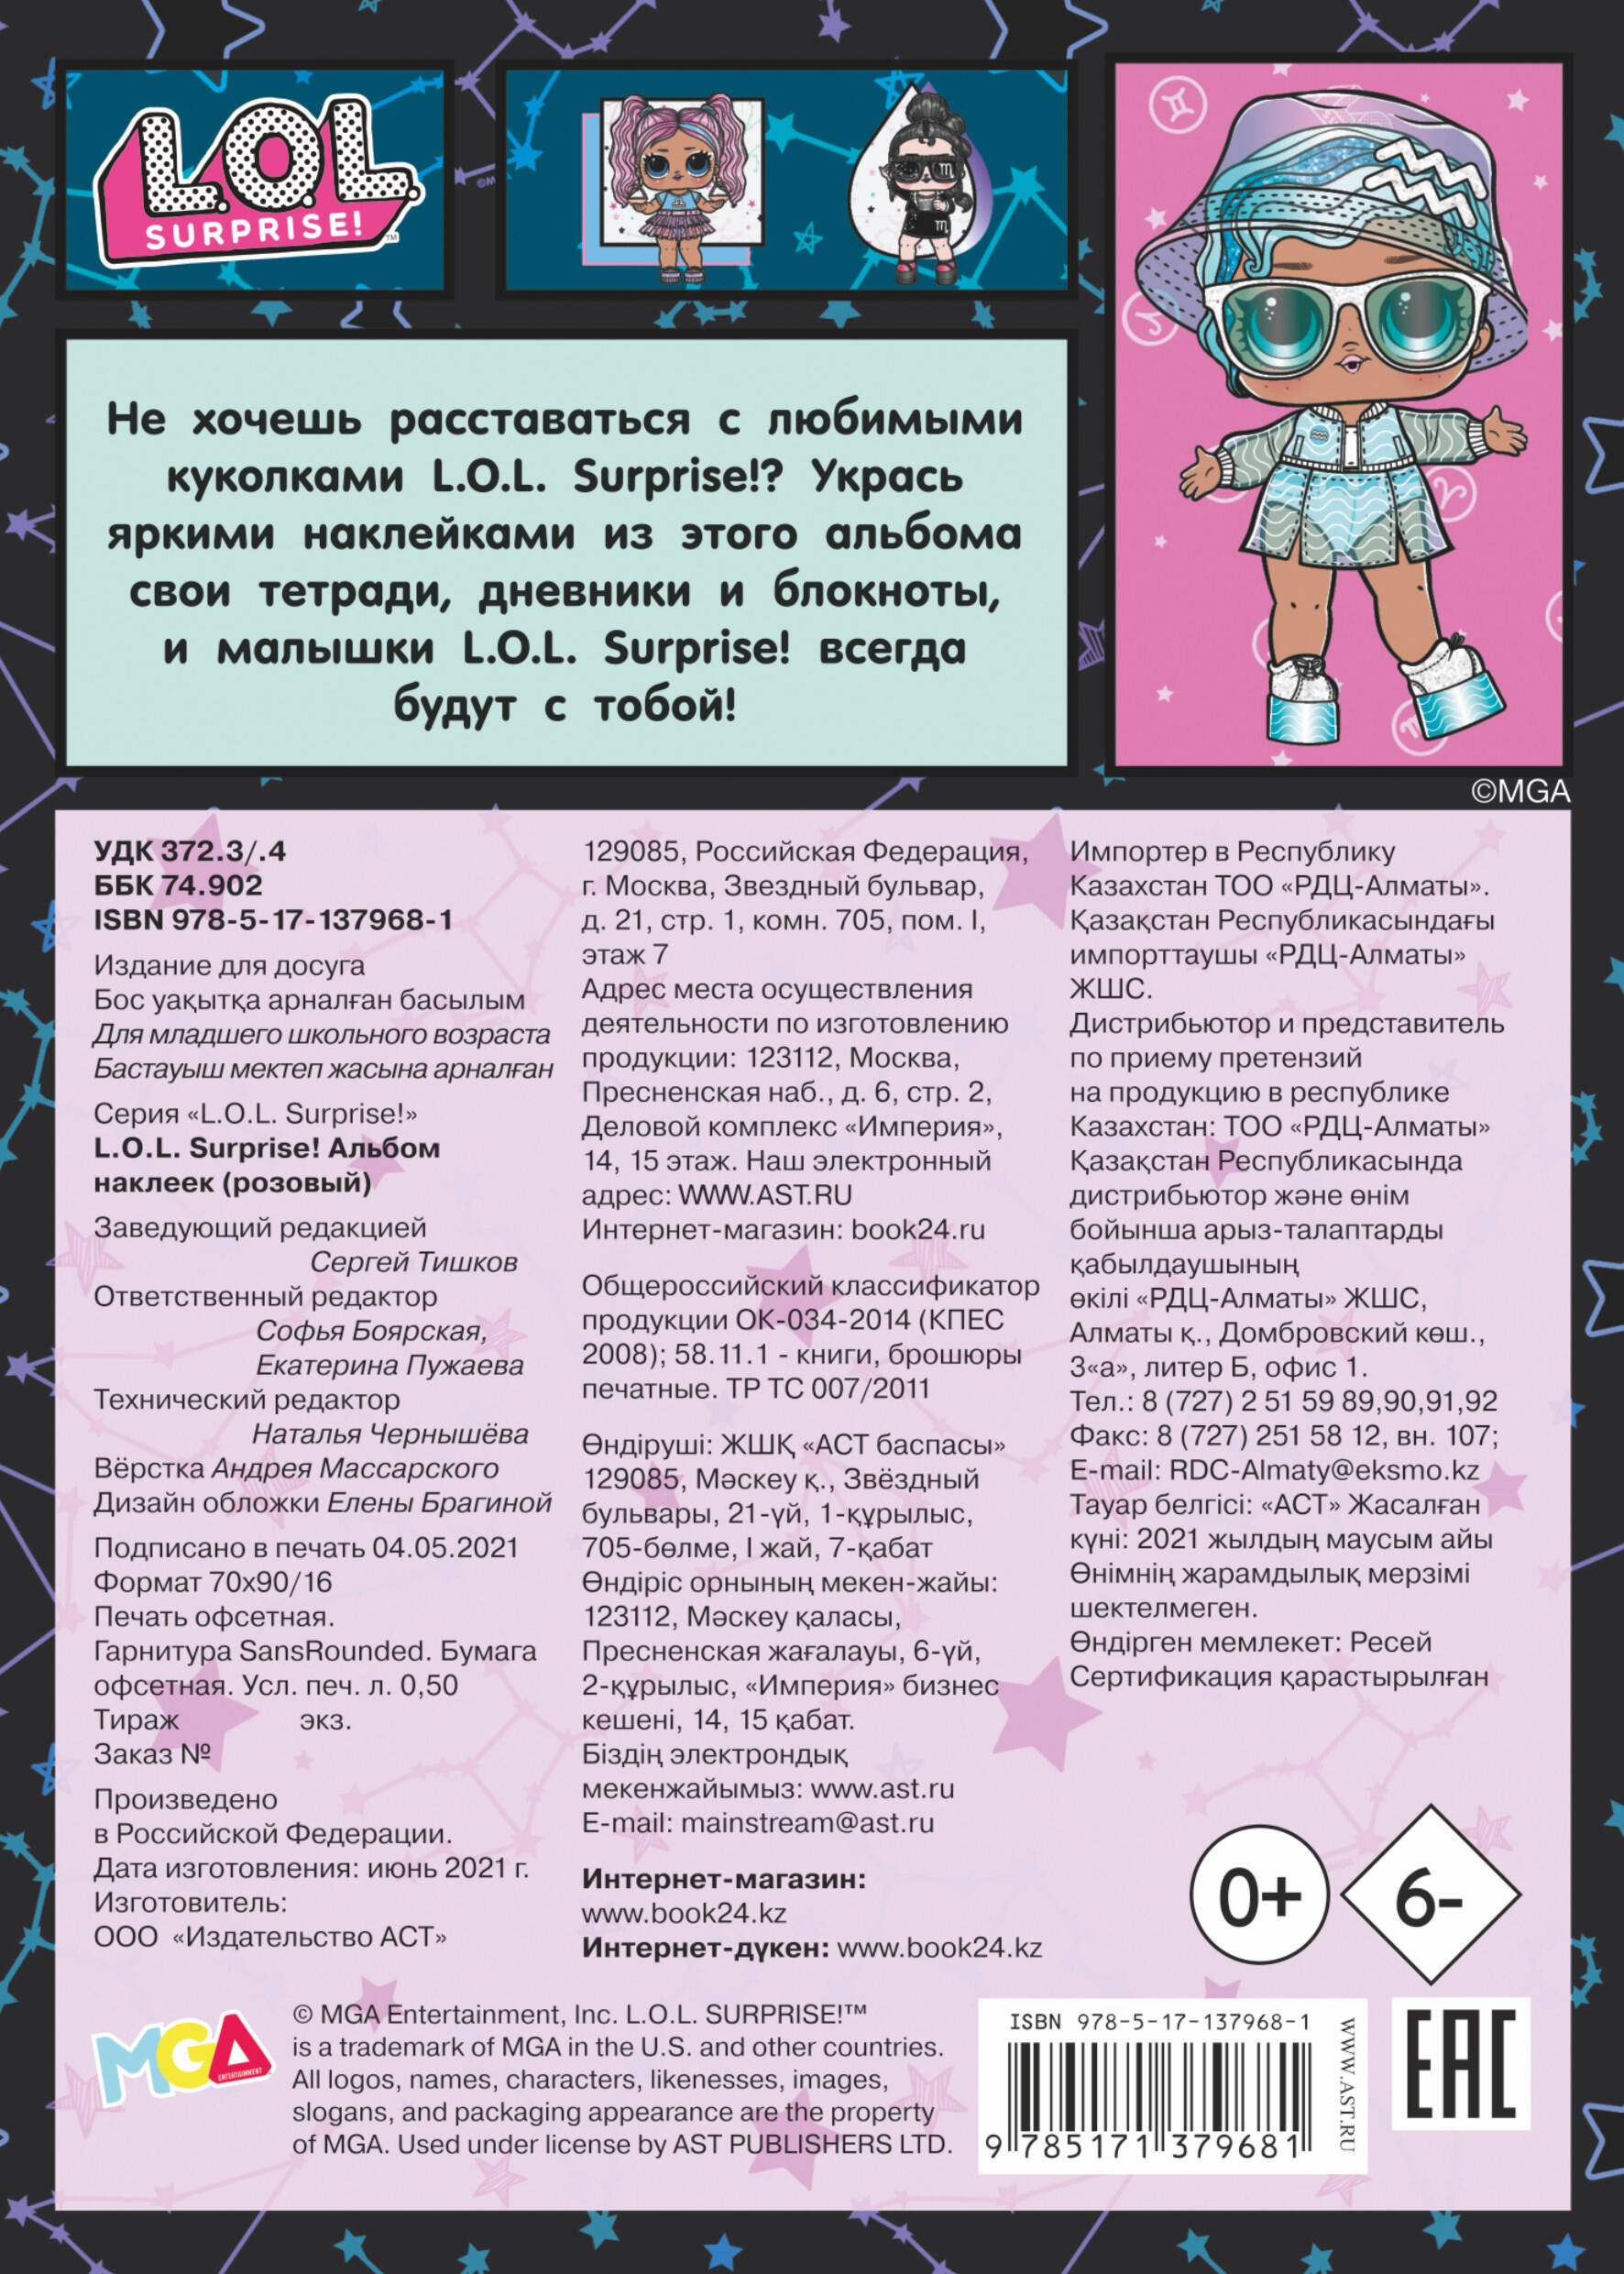  L.O.L. Surprise! Альбом наклеек (розовый) - страница 3